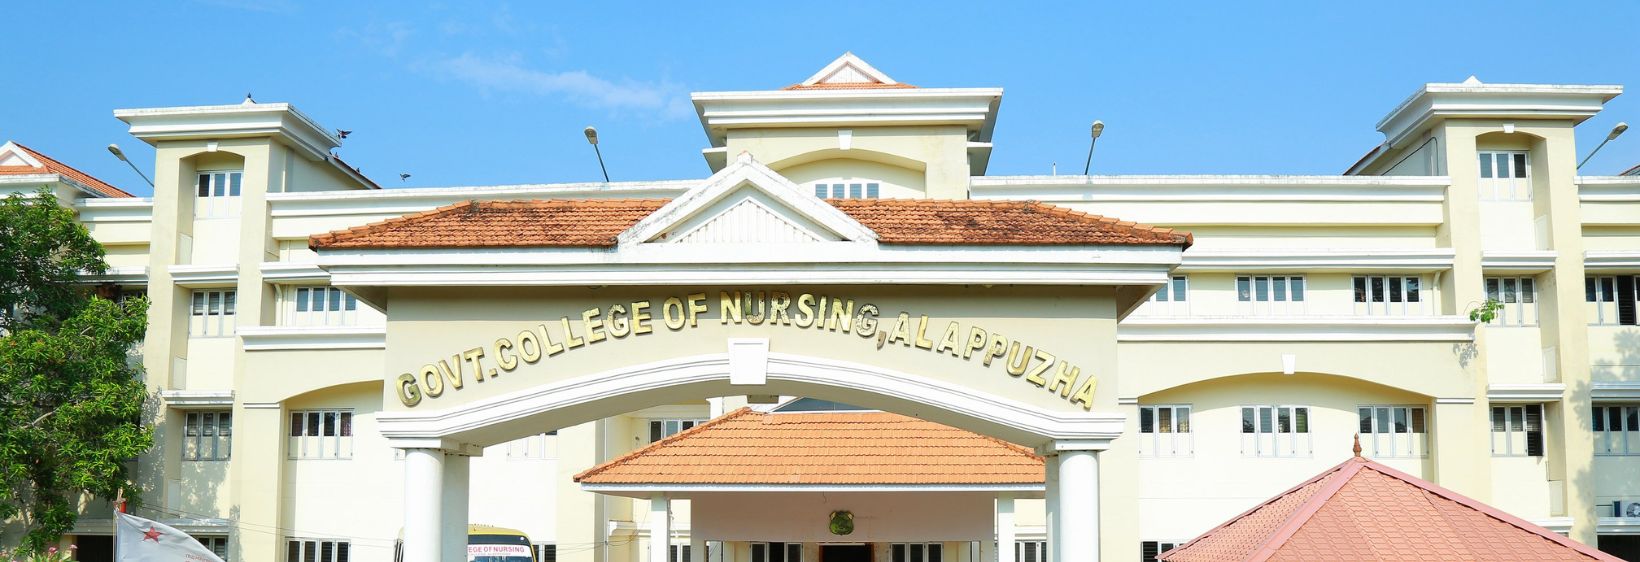 Govt. College of Nursing - Alappuzha